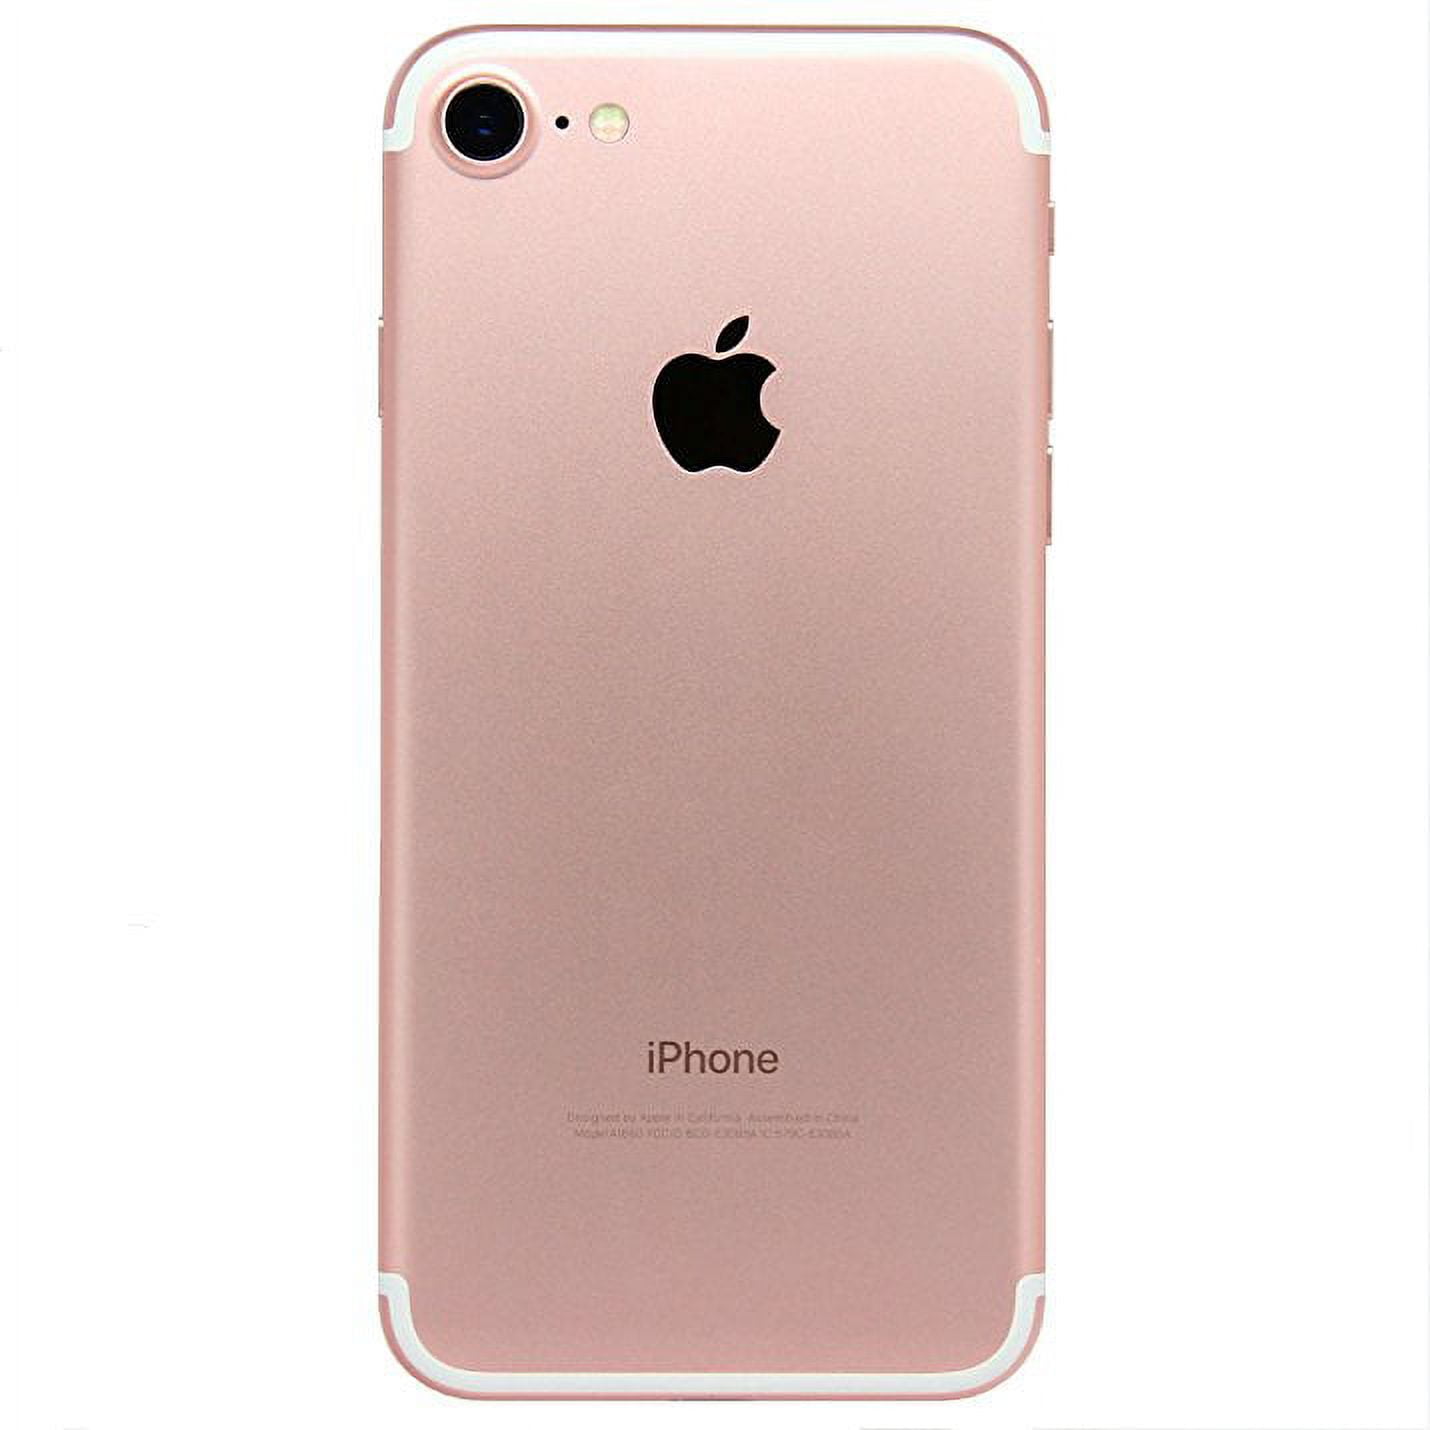 Apple iPhone 7 - 256 GB - Rose Gold - Unlocked - CDMA/GSM 